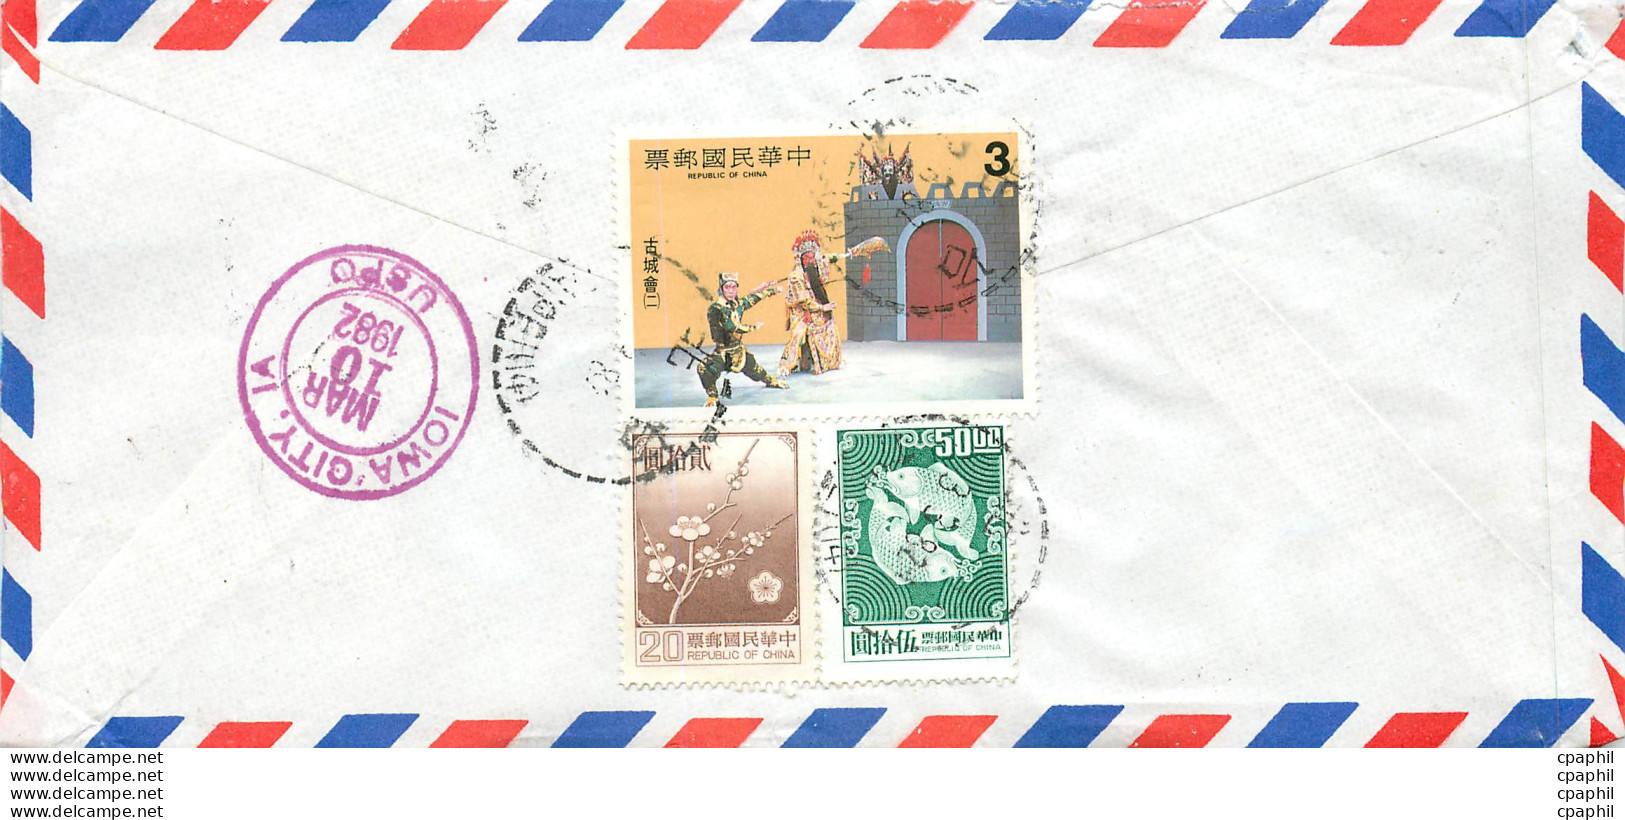 Lettre Cover For University Of Iowa Chine - Storia Postale